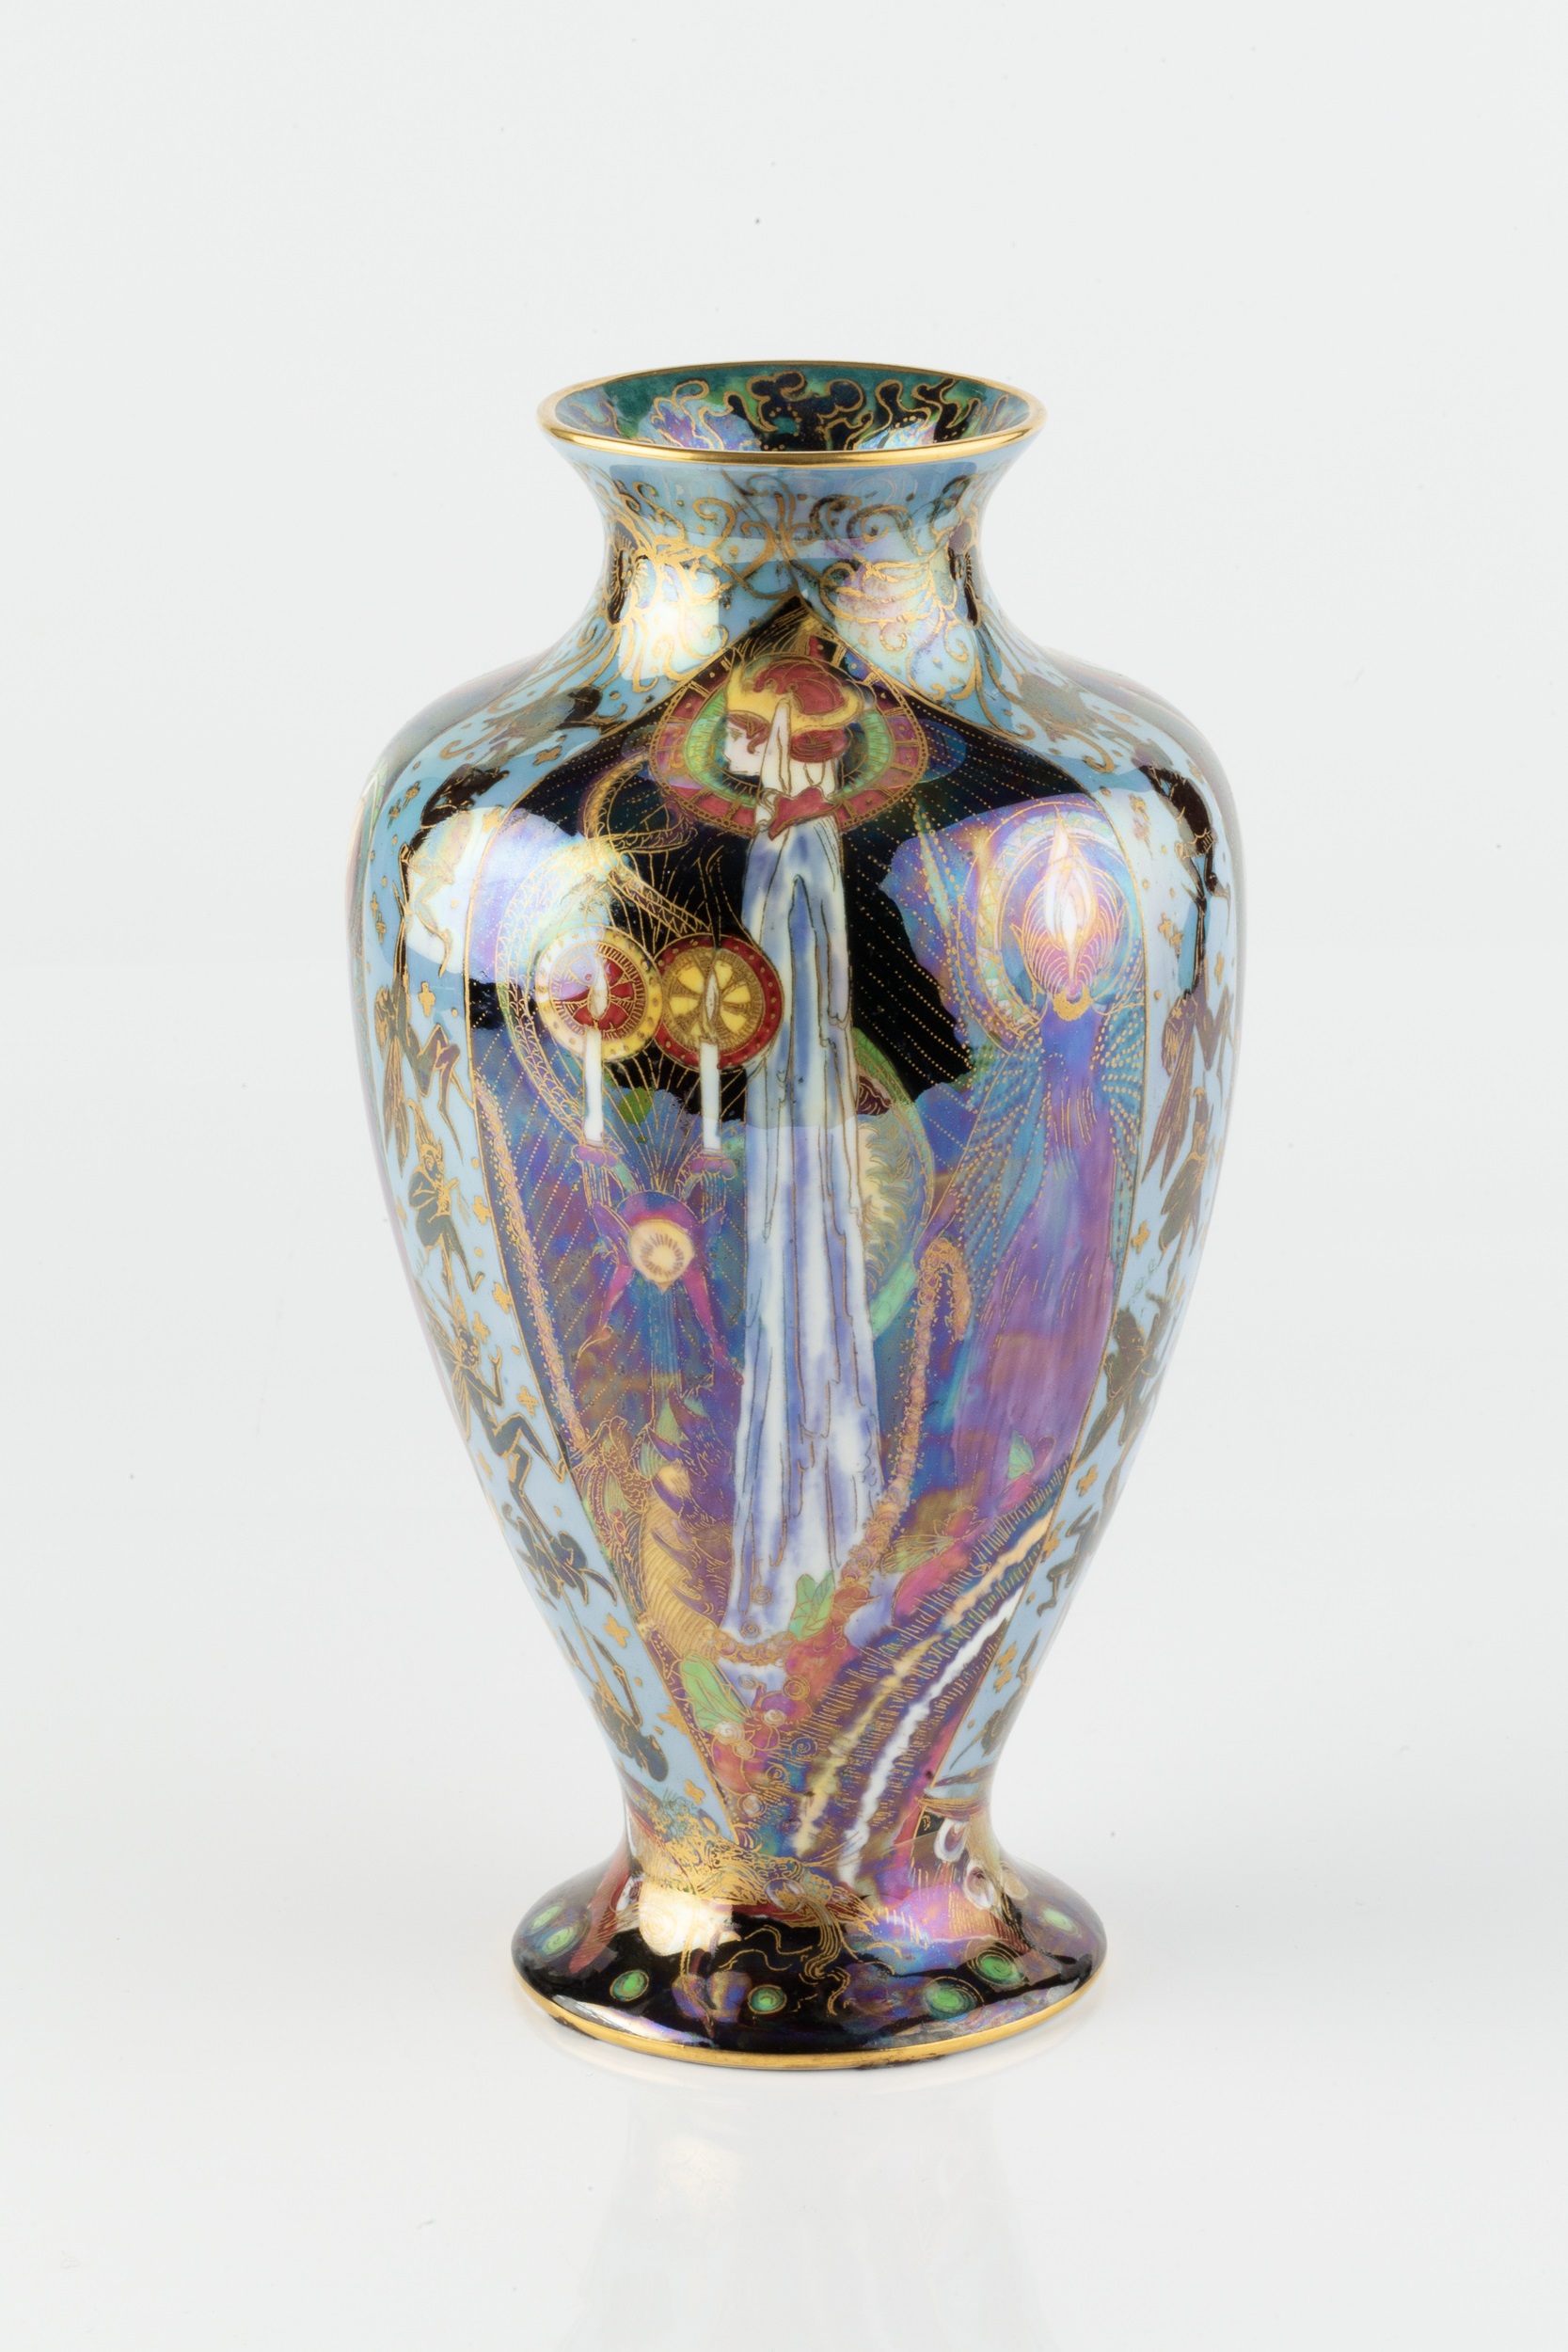 Daisy Makeig-Jones (1881-1945) for Wedgwood Fairyland lustre vase, circa 1925 candlemas pattern - Image 2 of 4